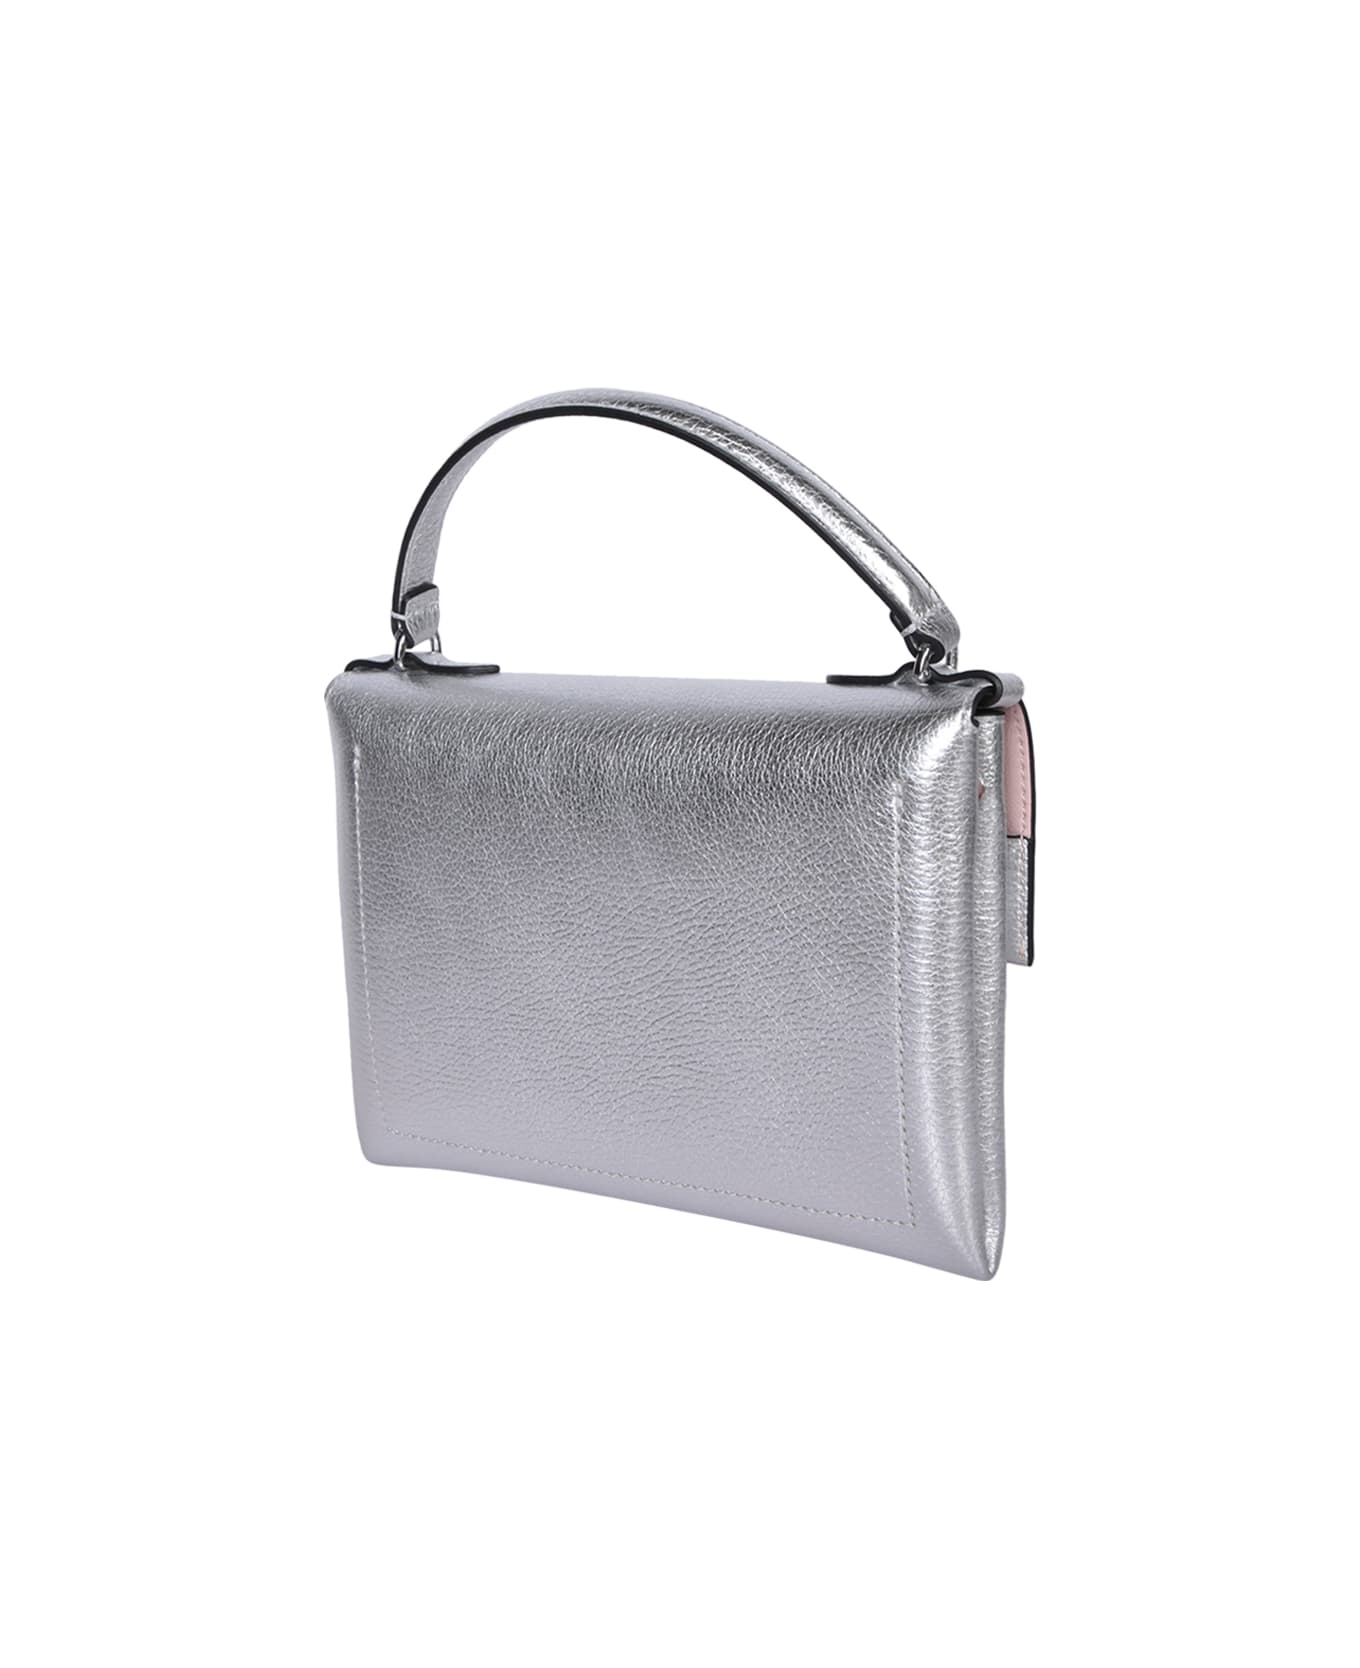 Coccinelle Binxie Mini Top Handle Silver Bag - Metallic トートバッグ